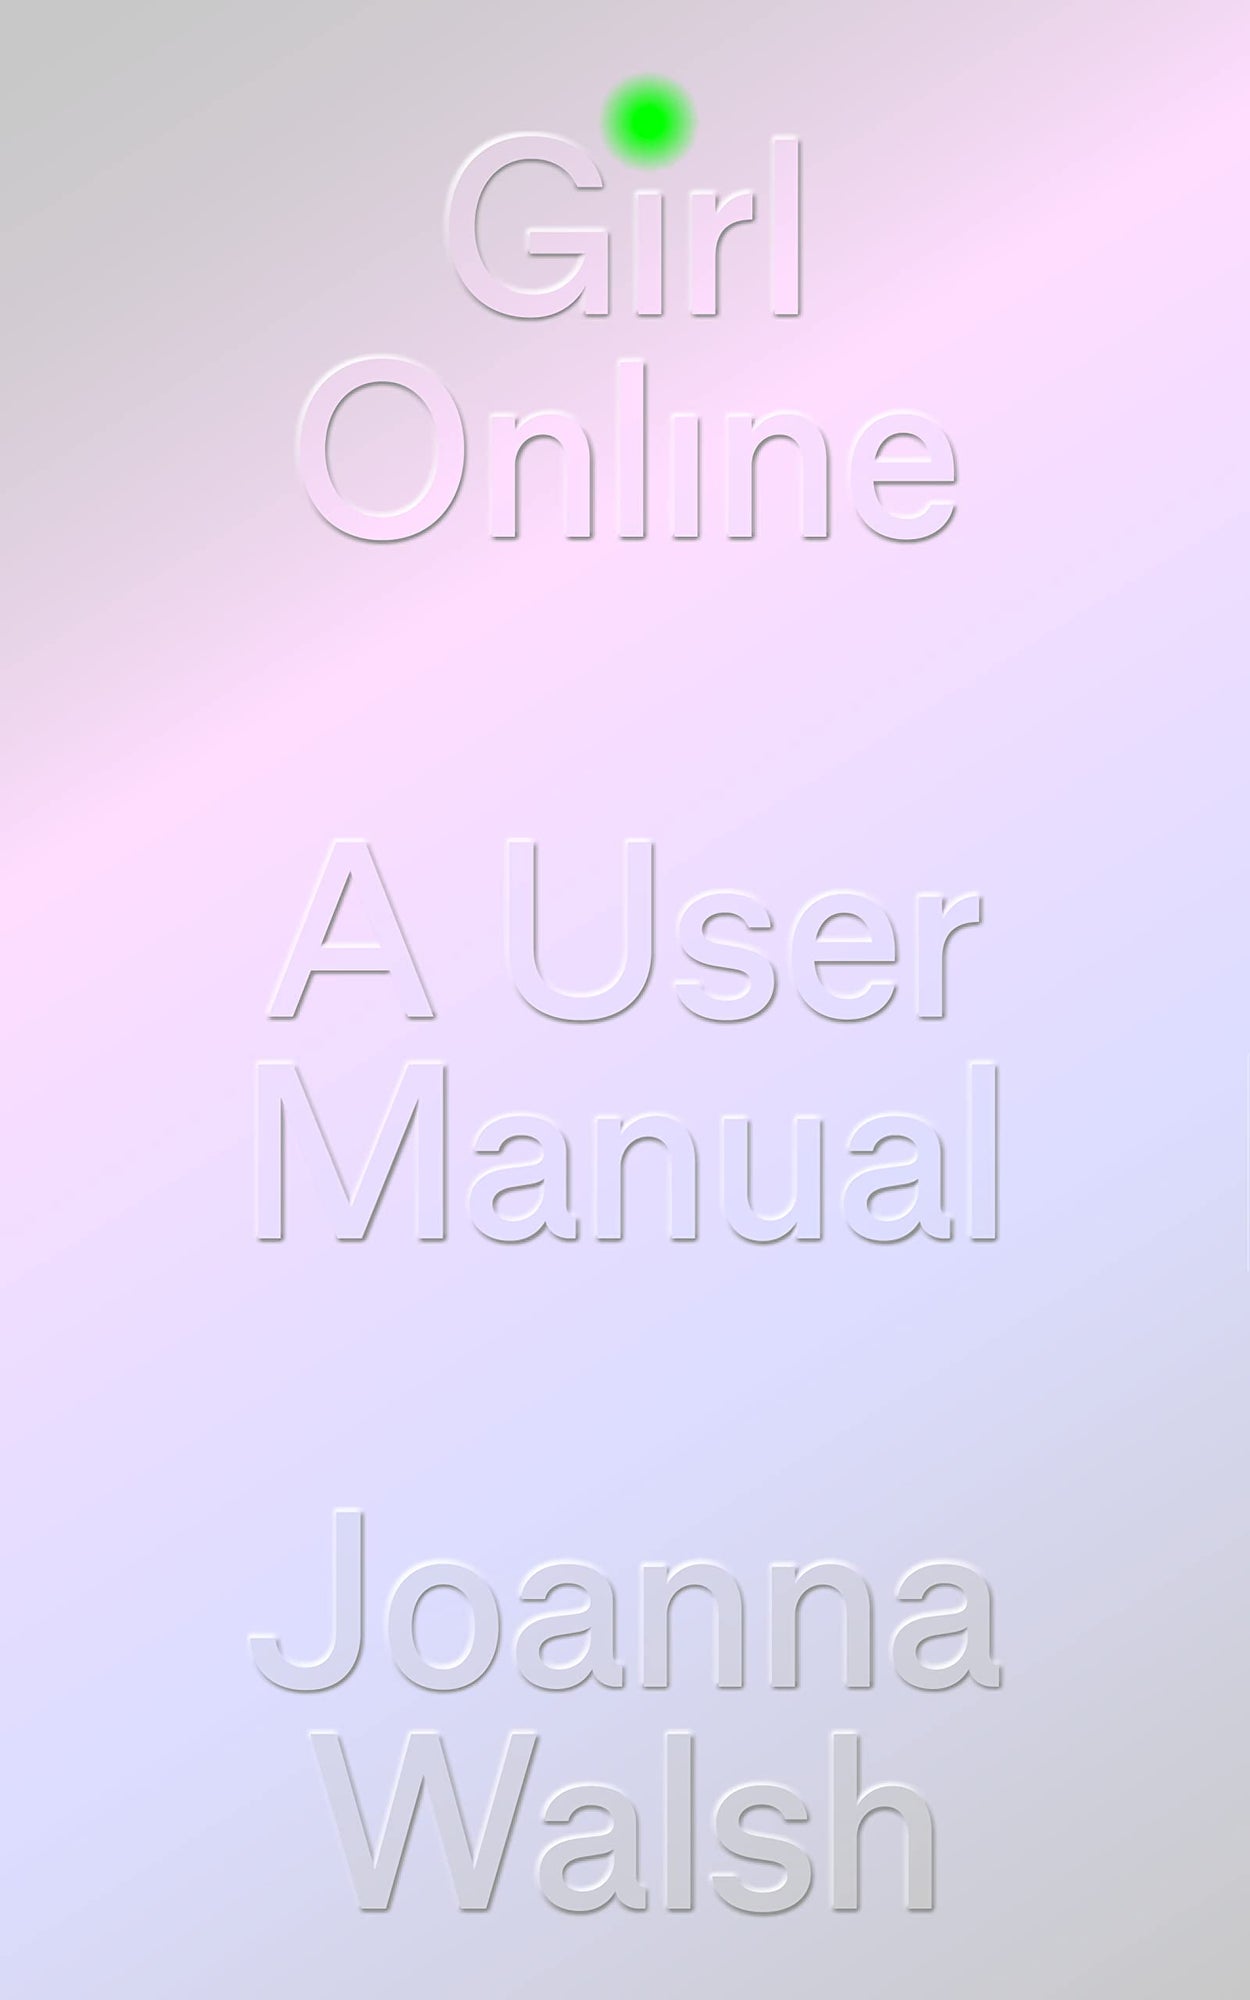 Girl Online. A User Manual